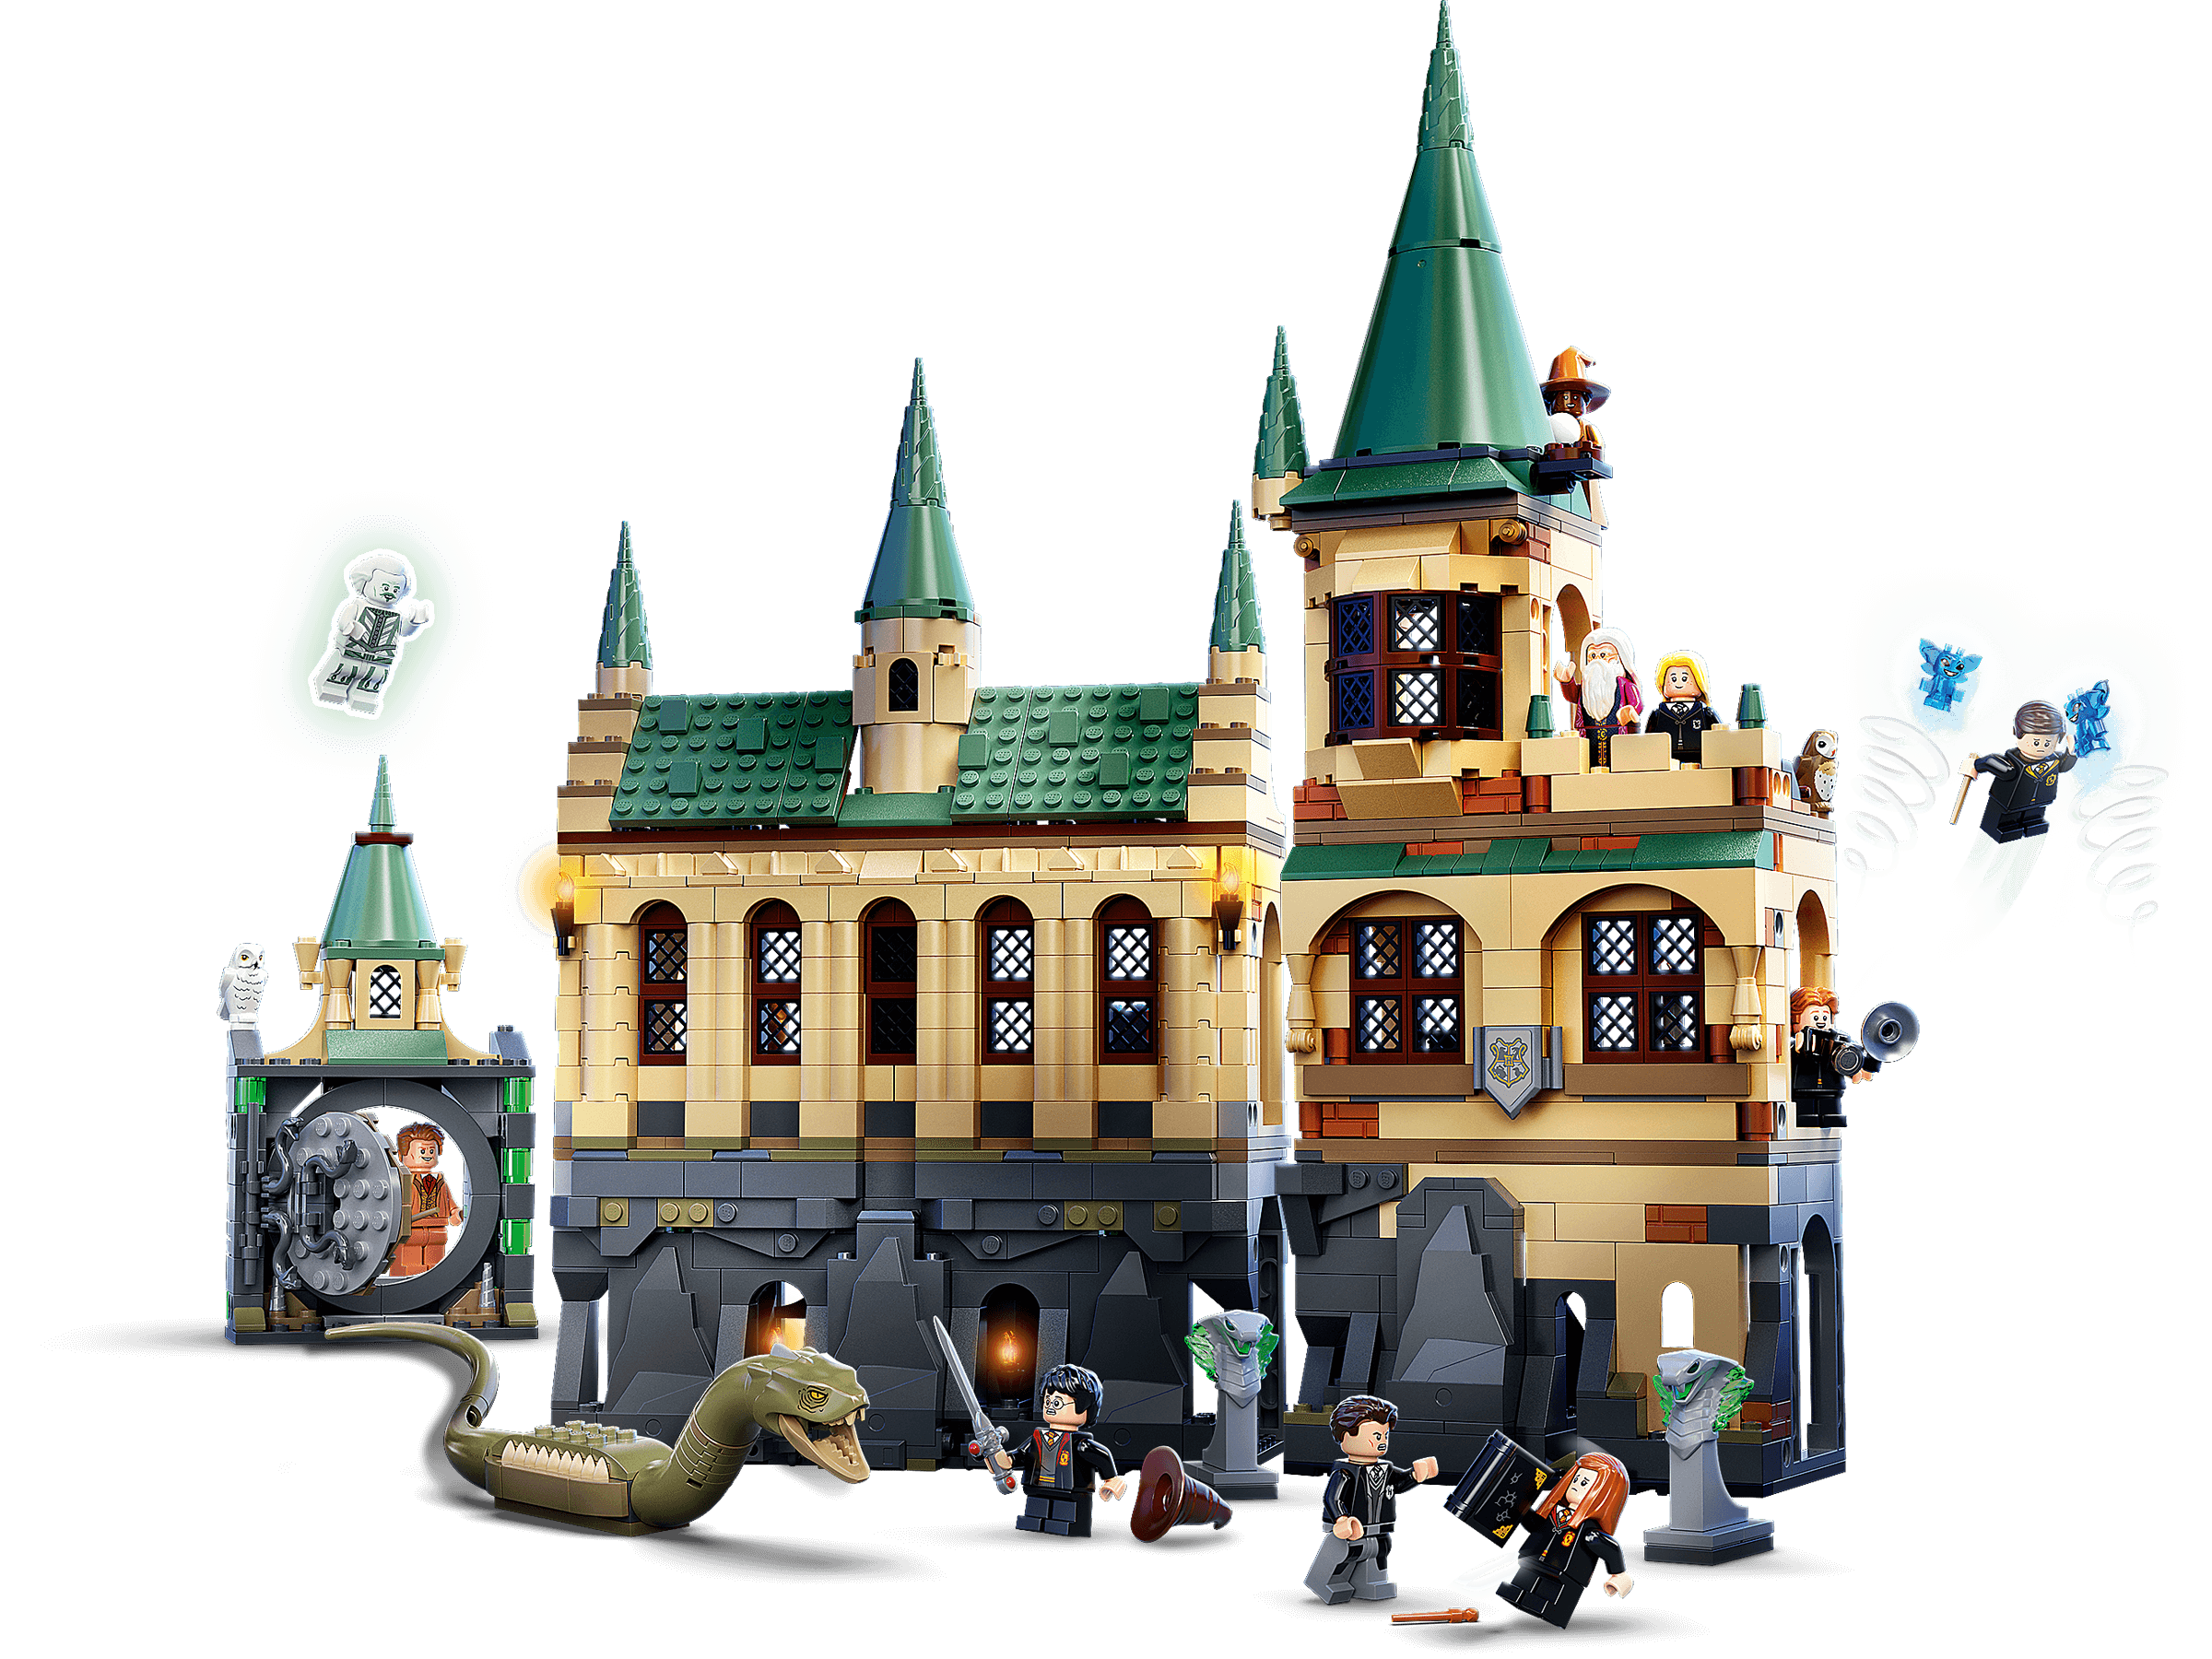 LEGO Harry Potter 76389 Hogwarts Chamber of Secrets Modular Castle Toy